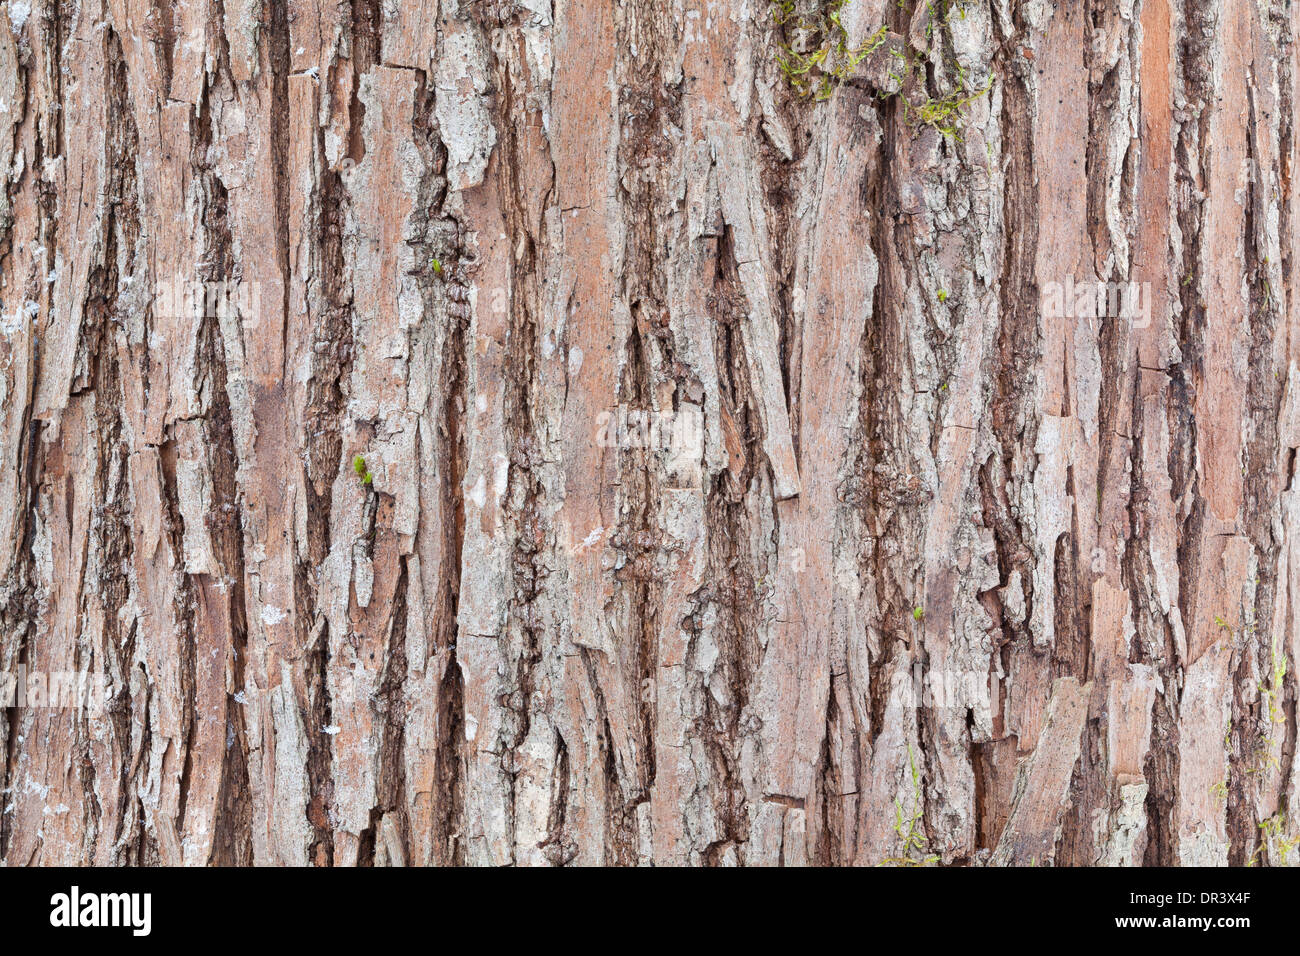 Natural tree bark surface textures Stock Photo